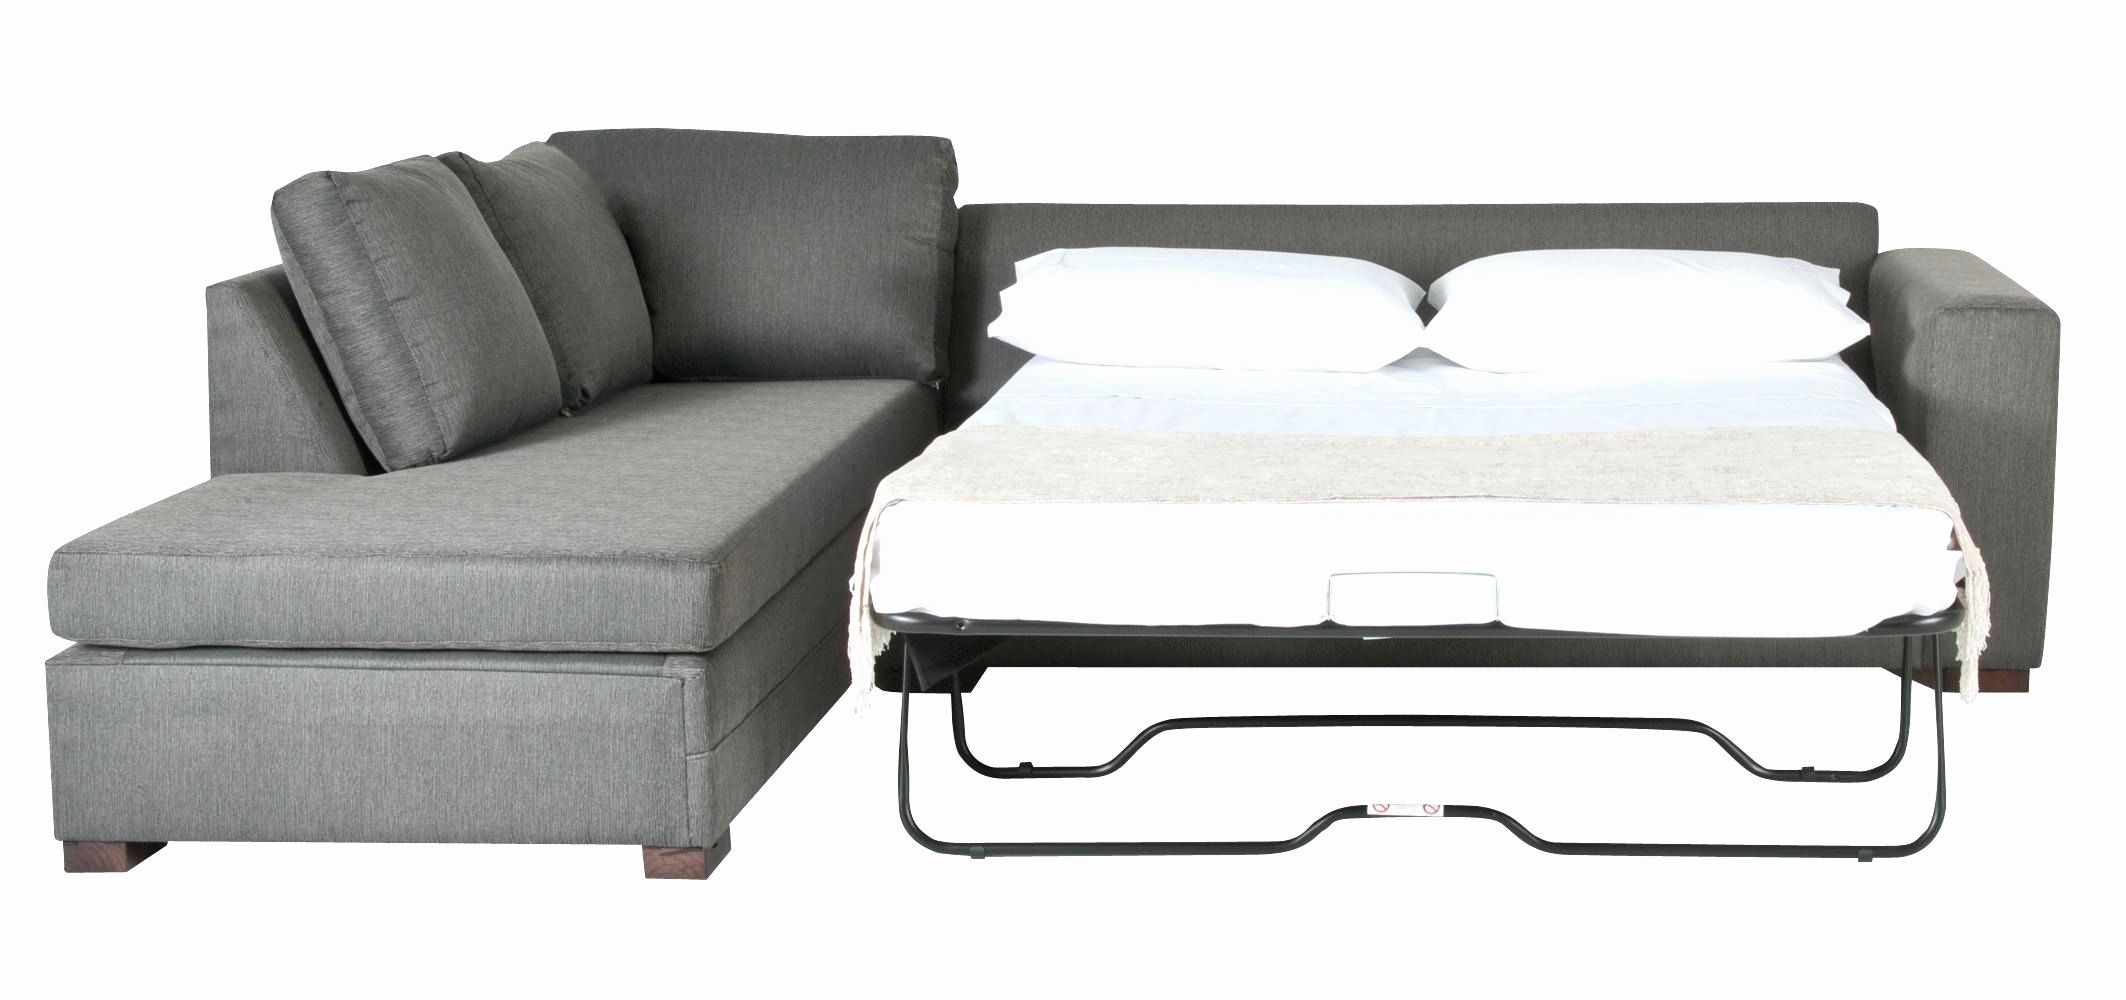 Kijiji Montreal Furniture Sofa | Conceptstructuresllc Intended For Kijiji Montreal Sectional Sofas (View 6 of 10)